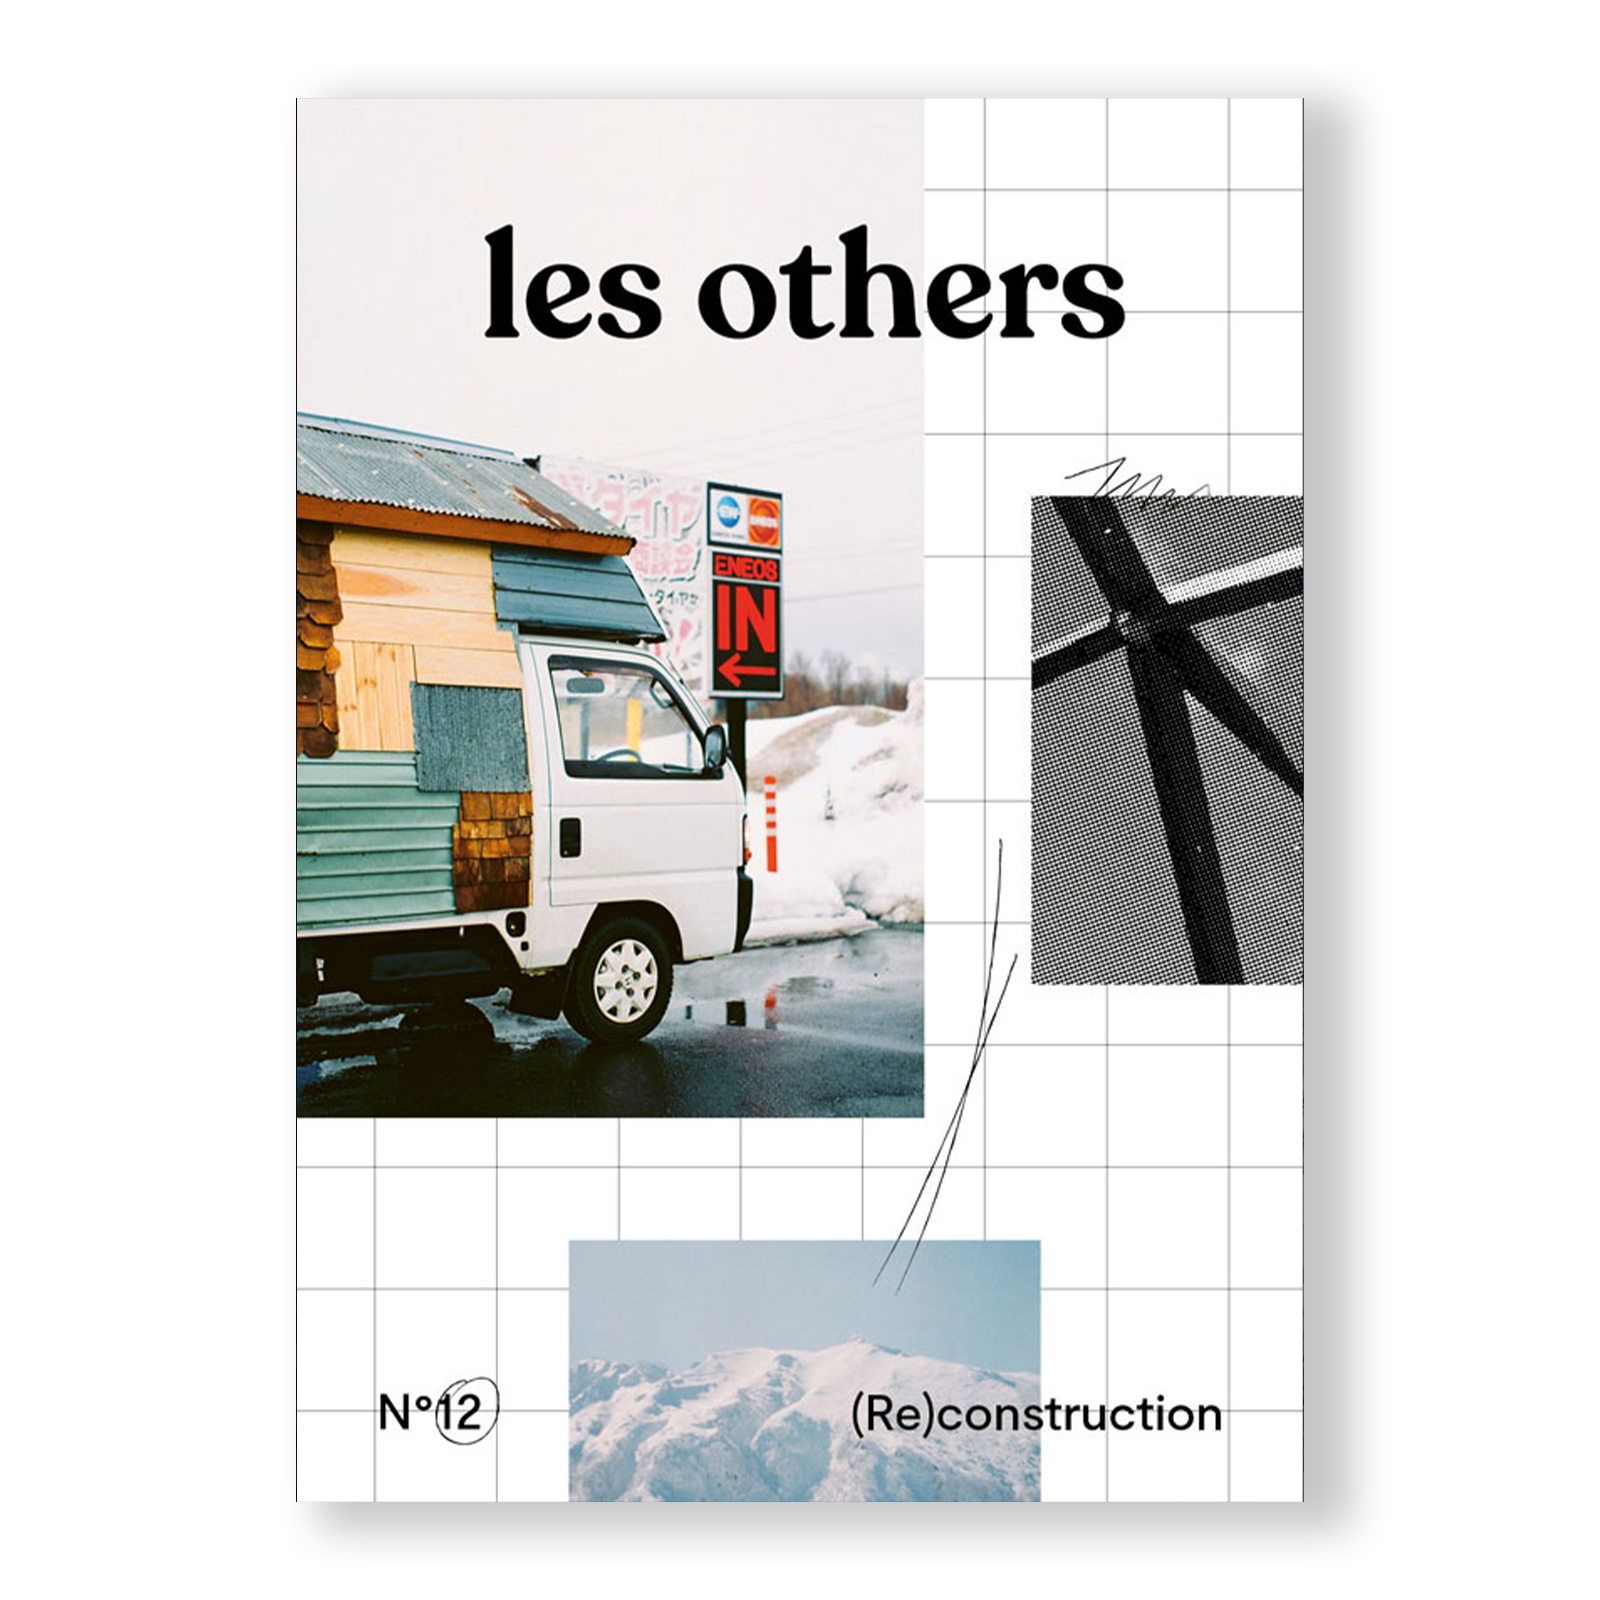 les others - (Re)construction (volume 12)